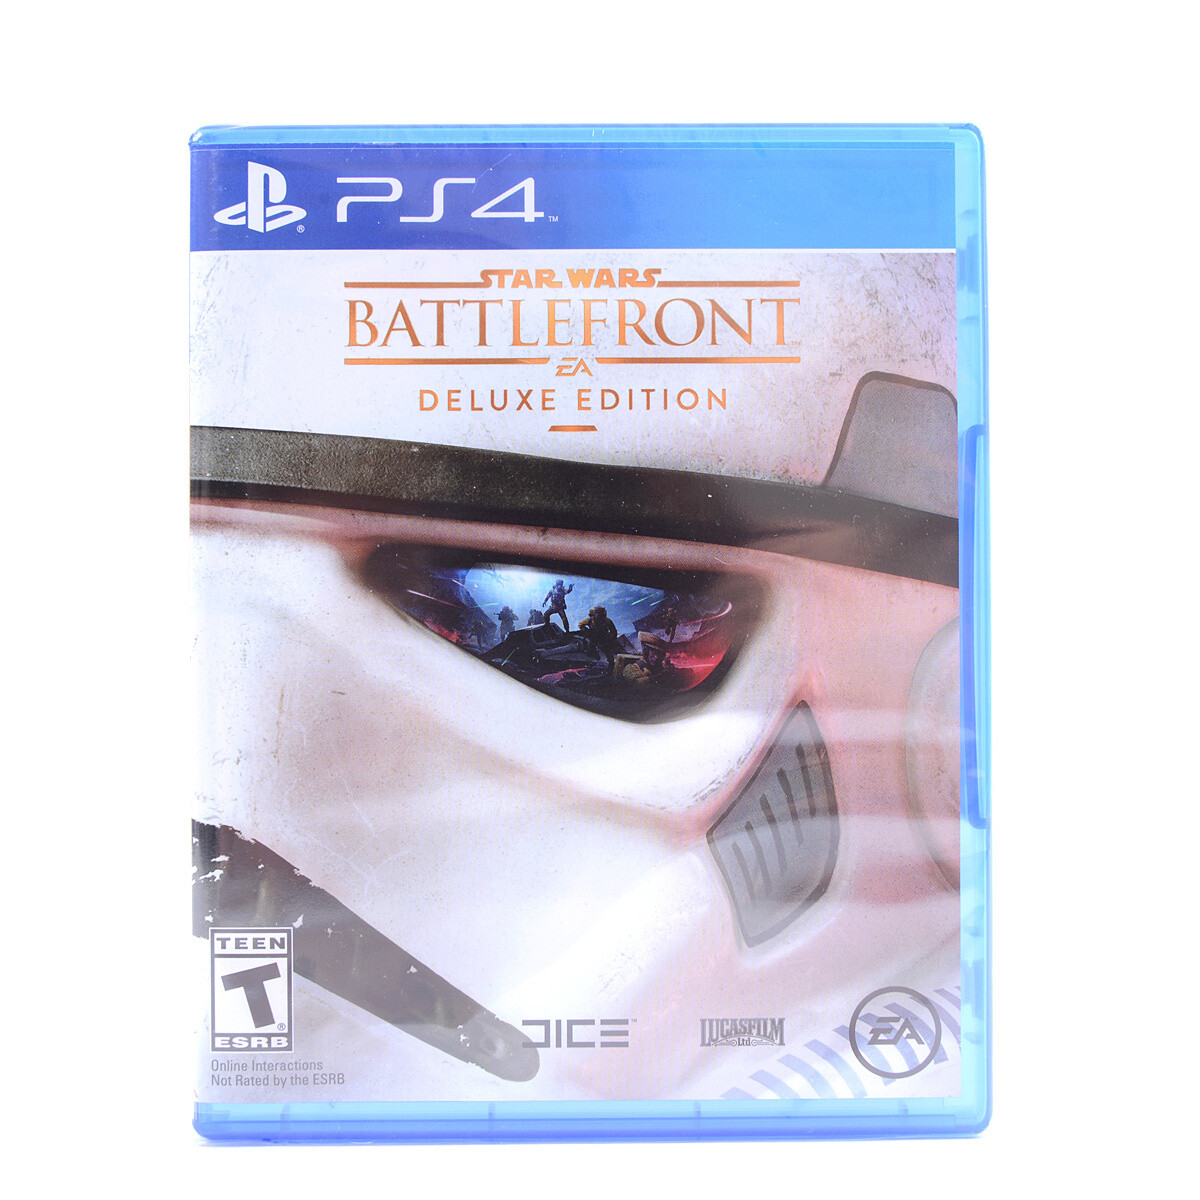 Star Wars Battlefront Deluxe Edition - Tokyo Otaku Mode (TOM)